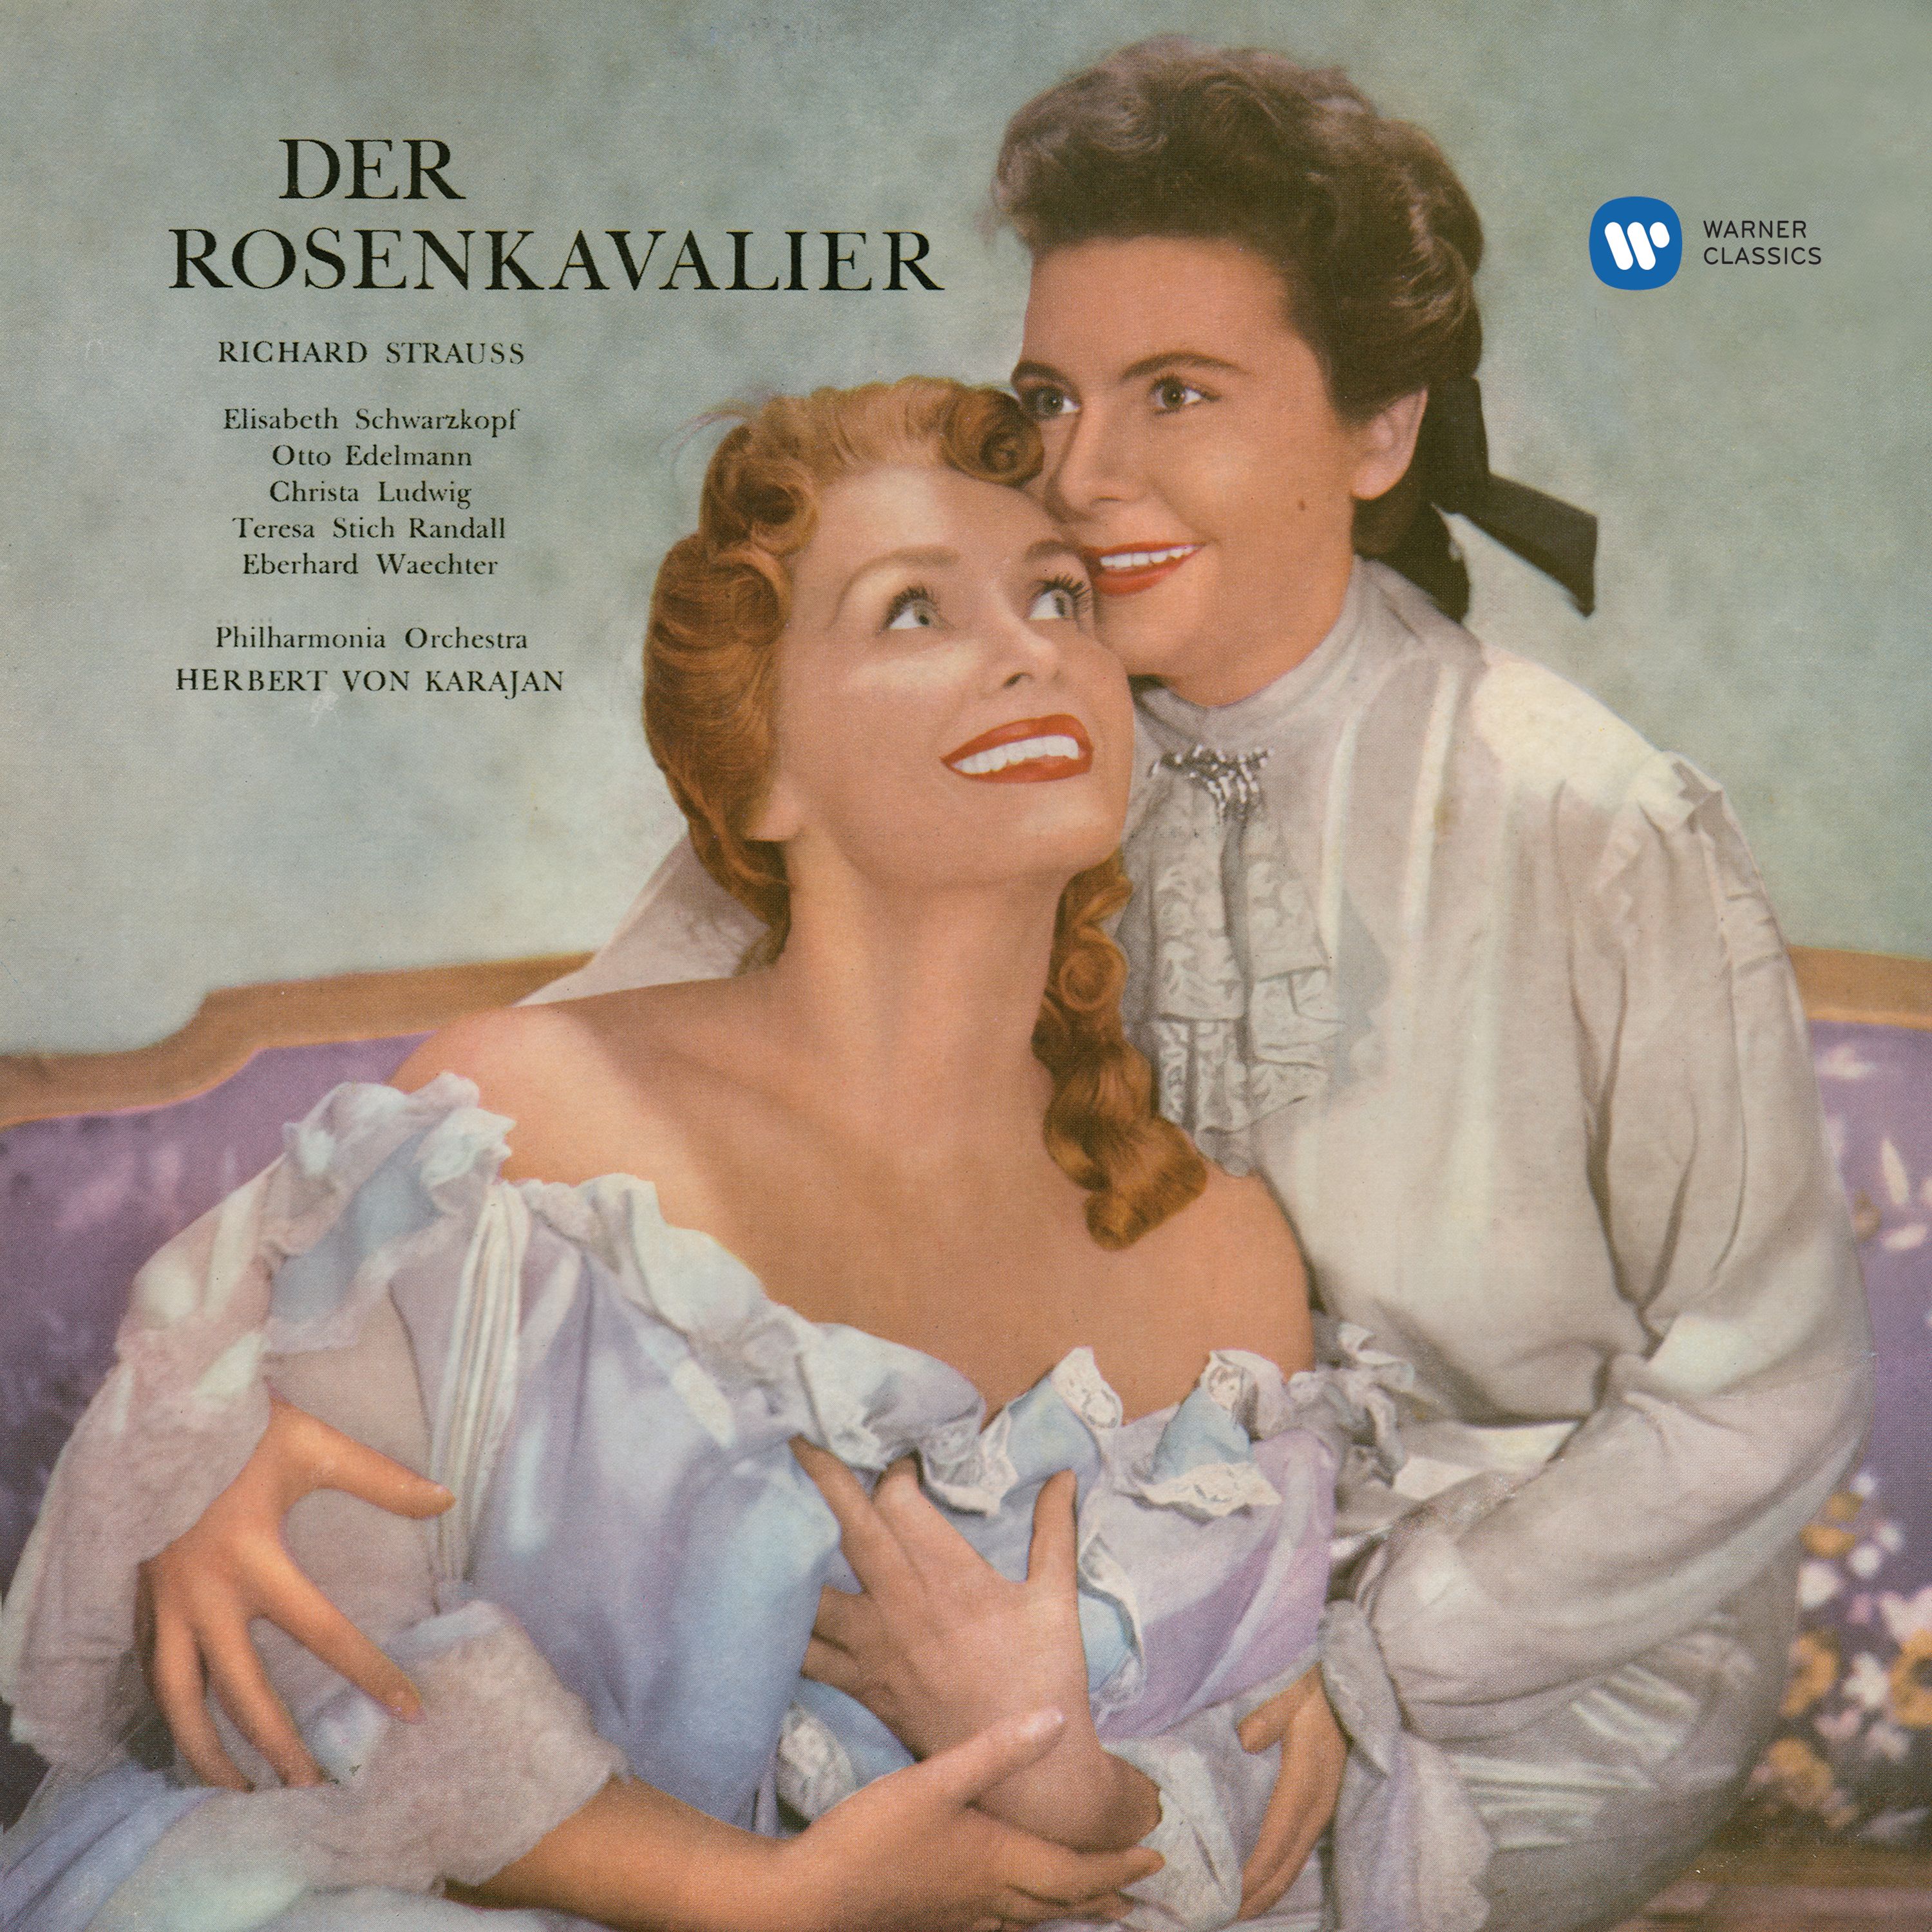 Der Rosenkavalier, Op. 59, Act 2: "Ganz zu Befehl, Herr Kavalier" (Ochs, Annina)